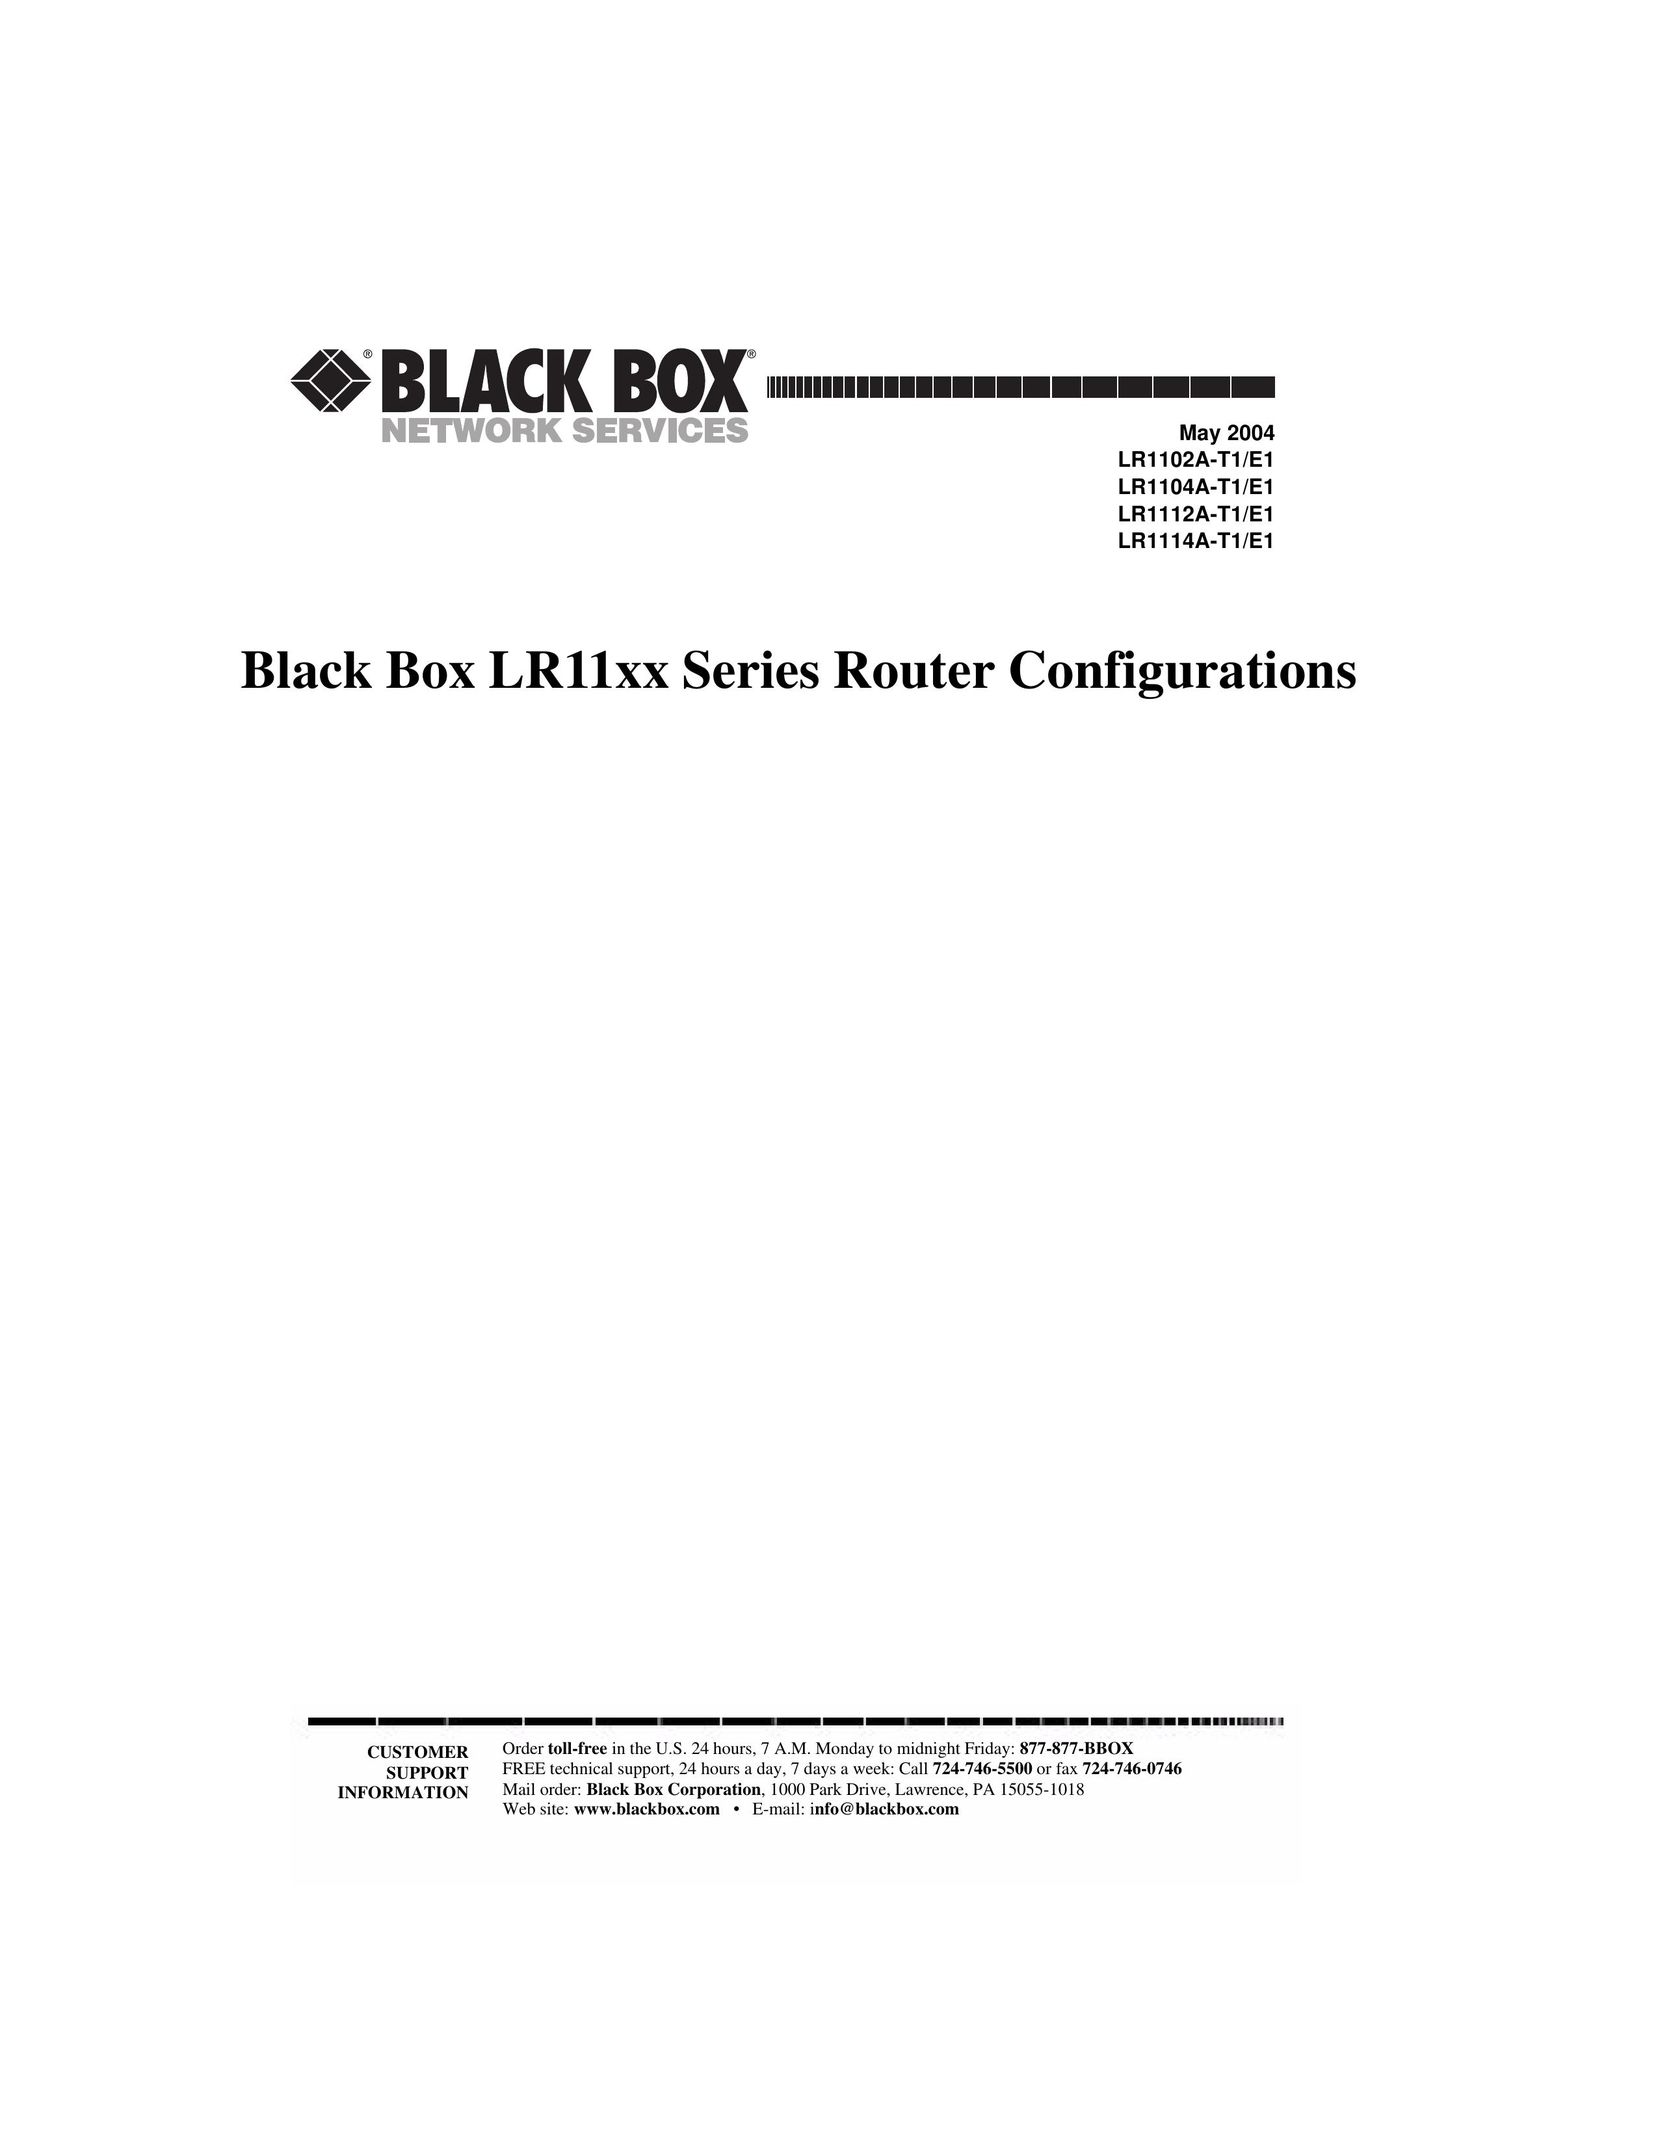 Black Box LR1114A-T1/E1 Network Router User Manual